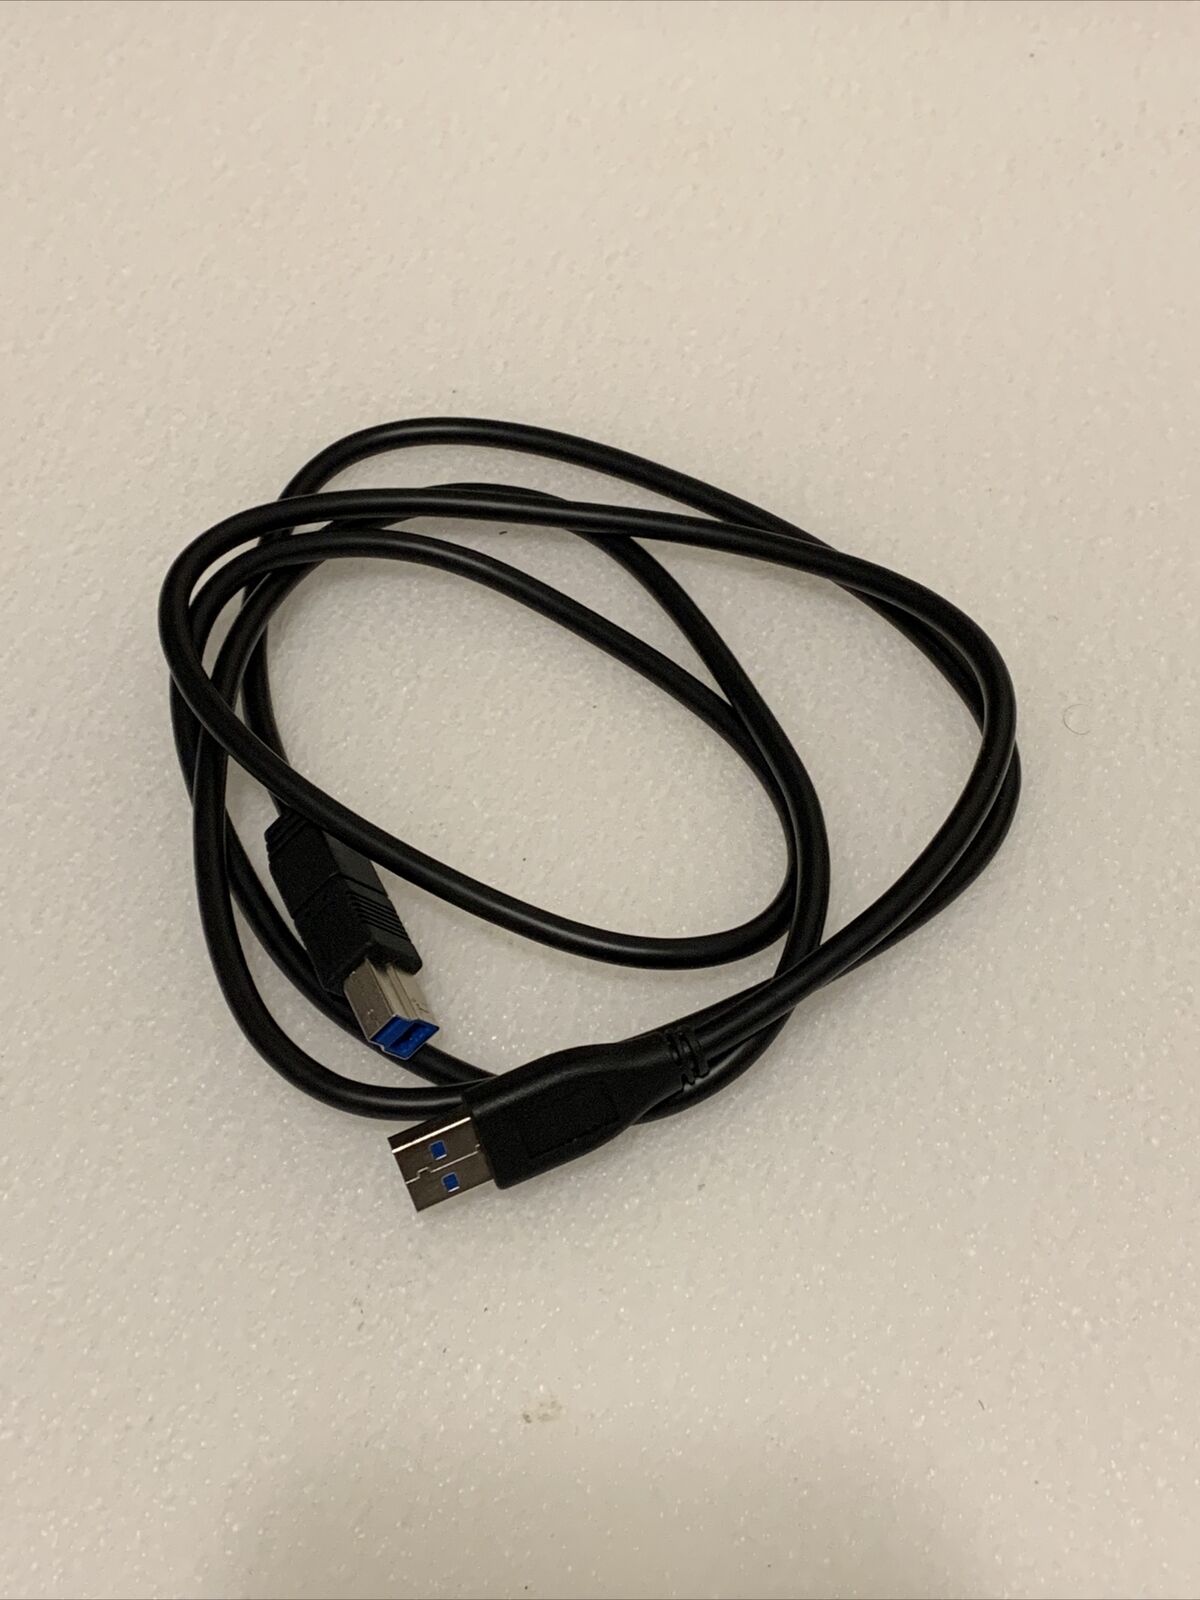 original USB 3 cable for studio 192 presonus (Type A to usb 3 type B I think)